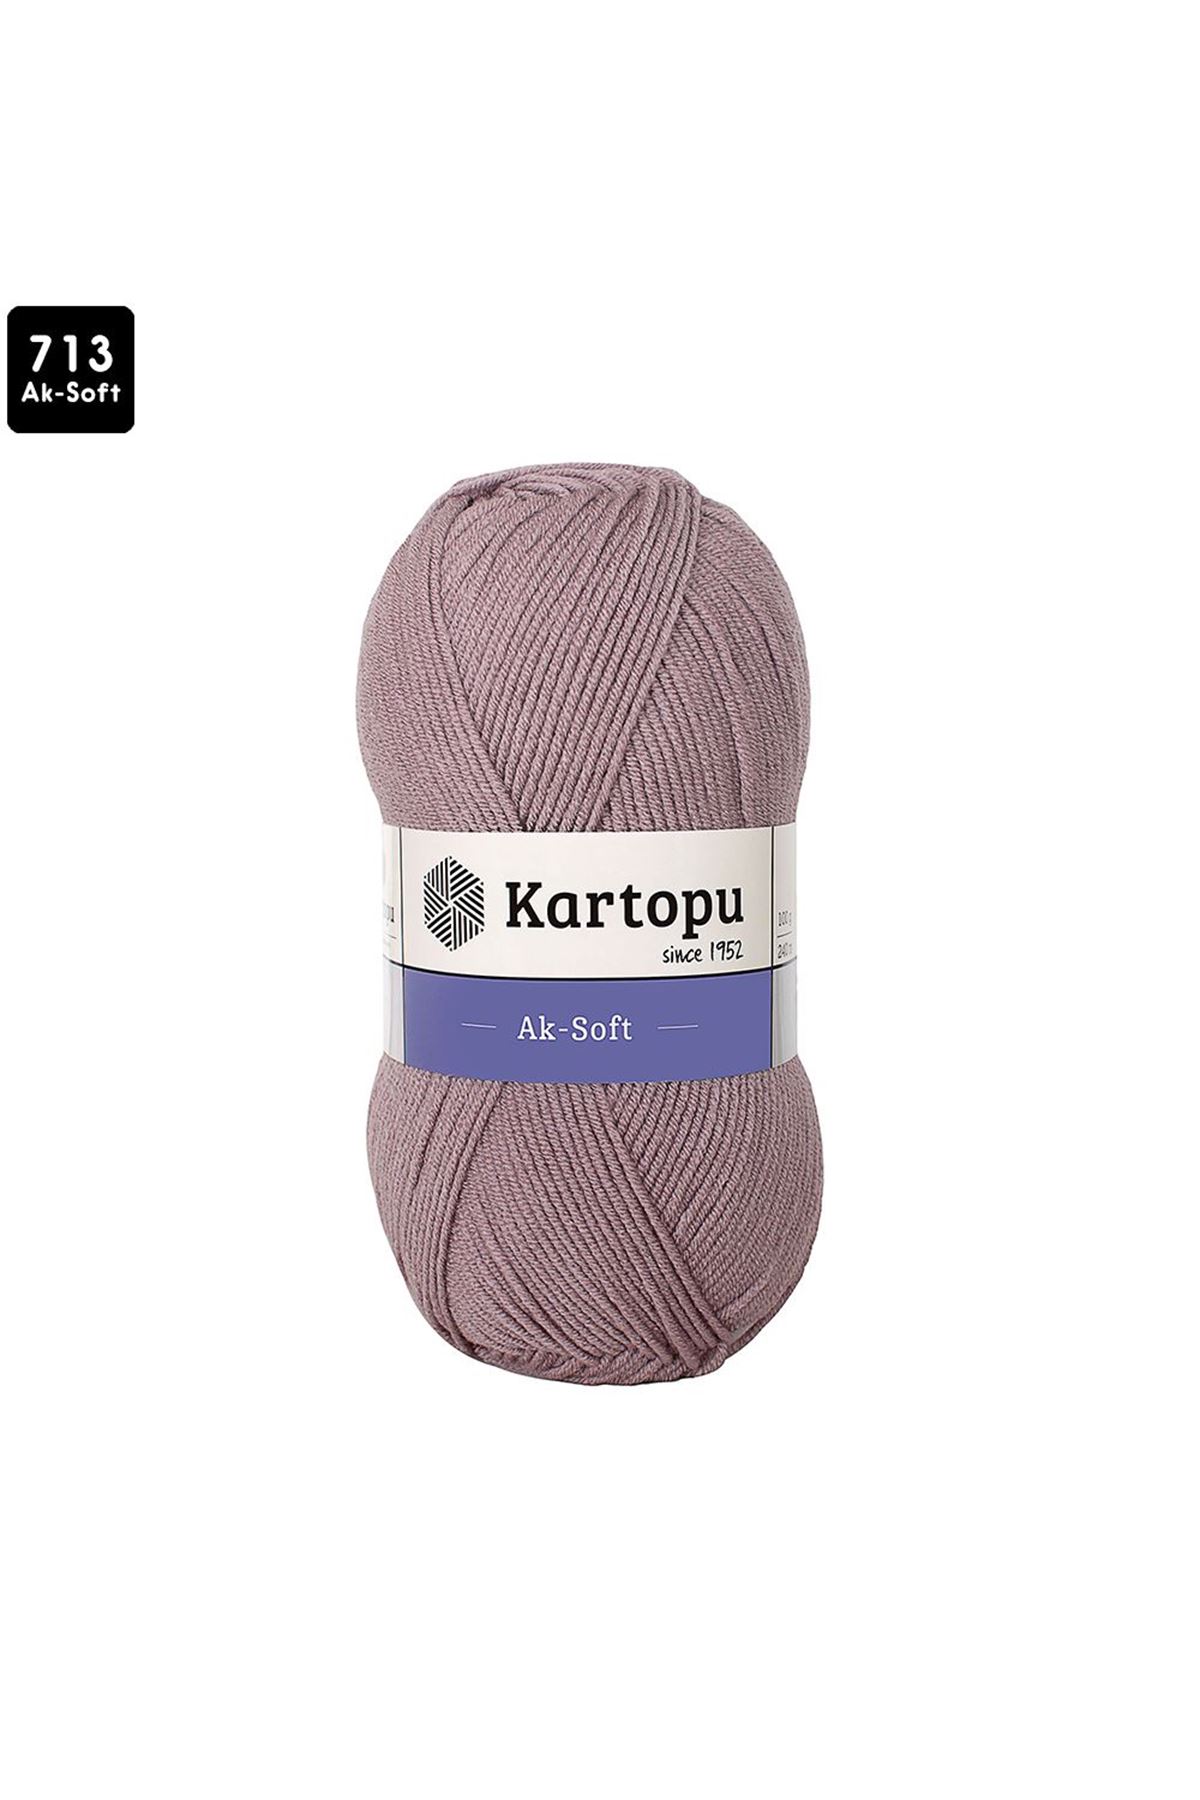 Kartopu Ak-Soft Renk No:713